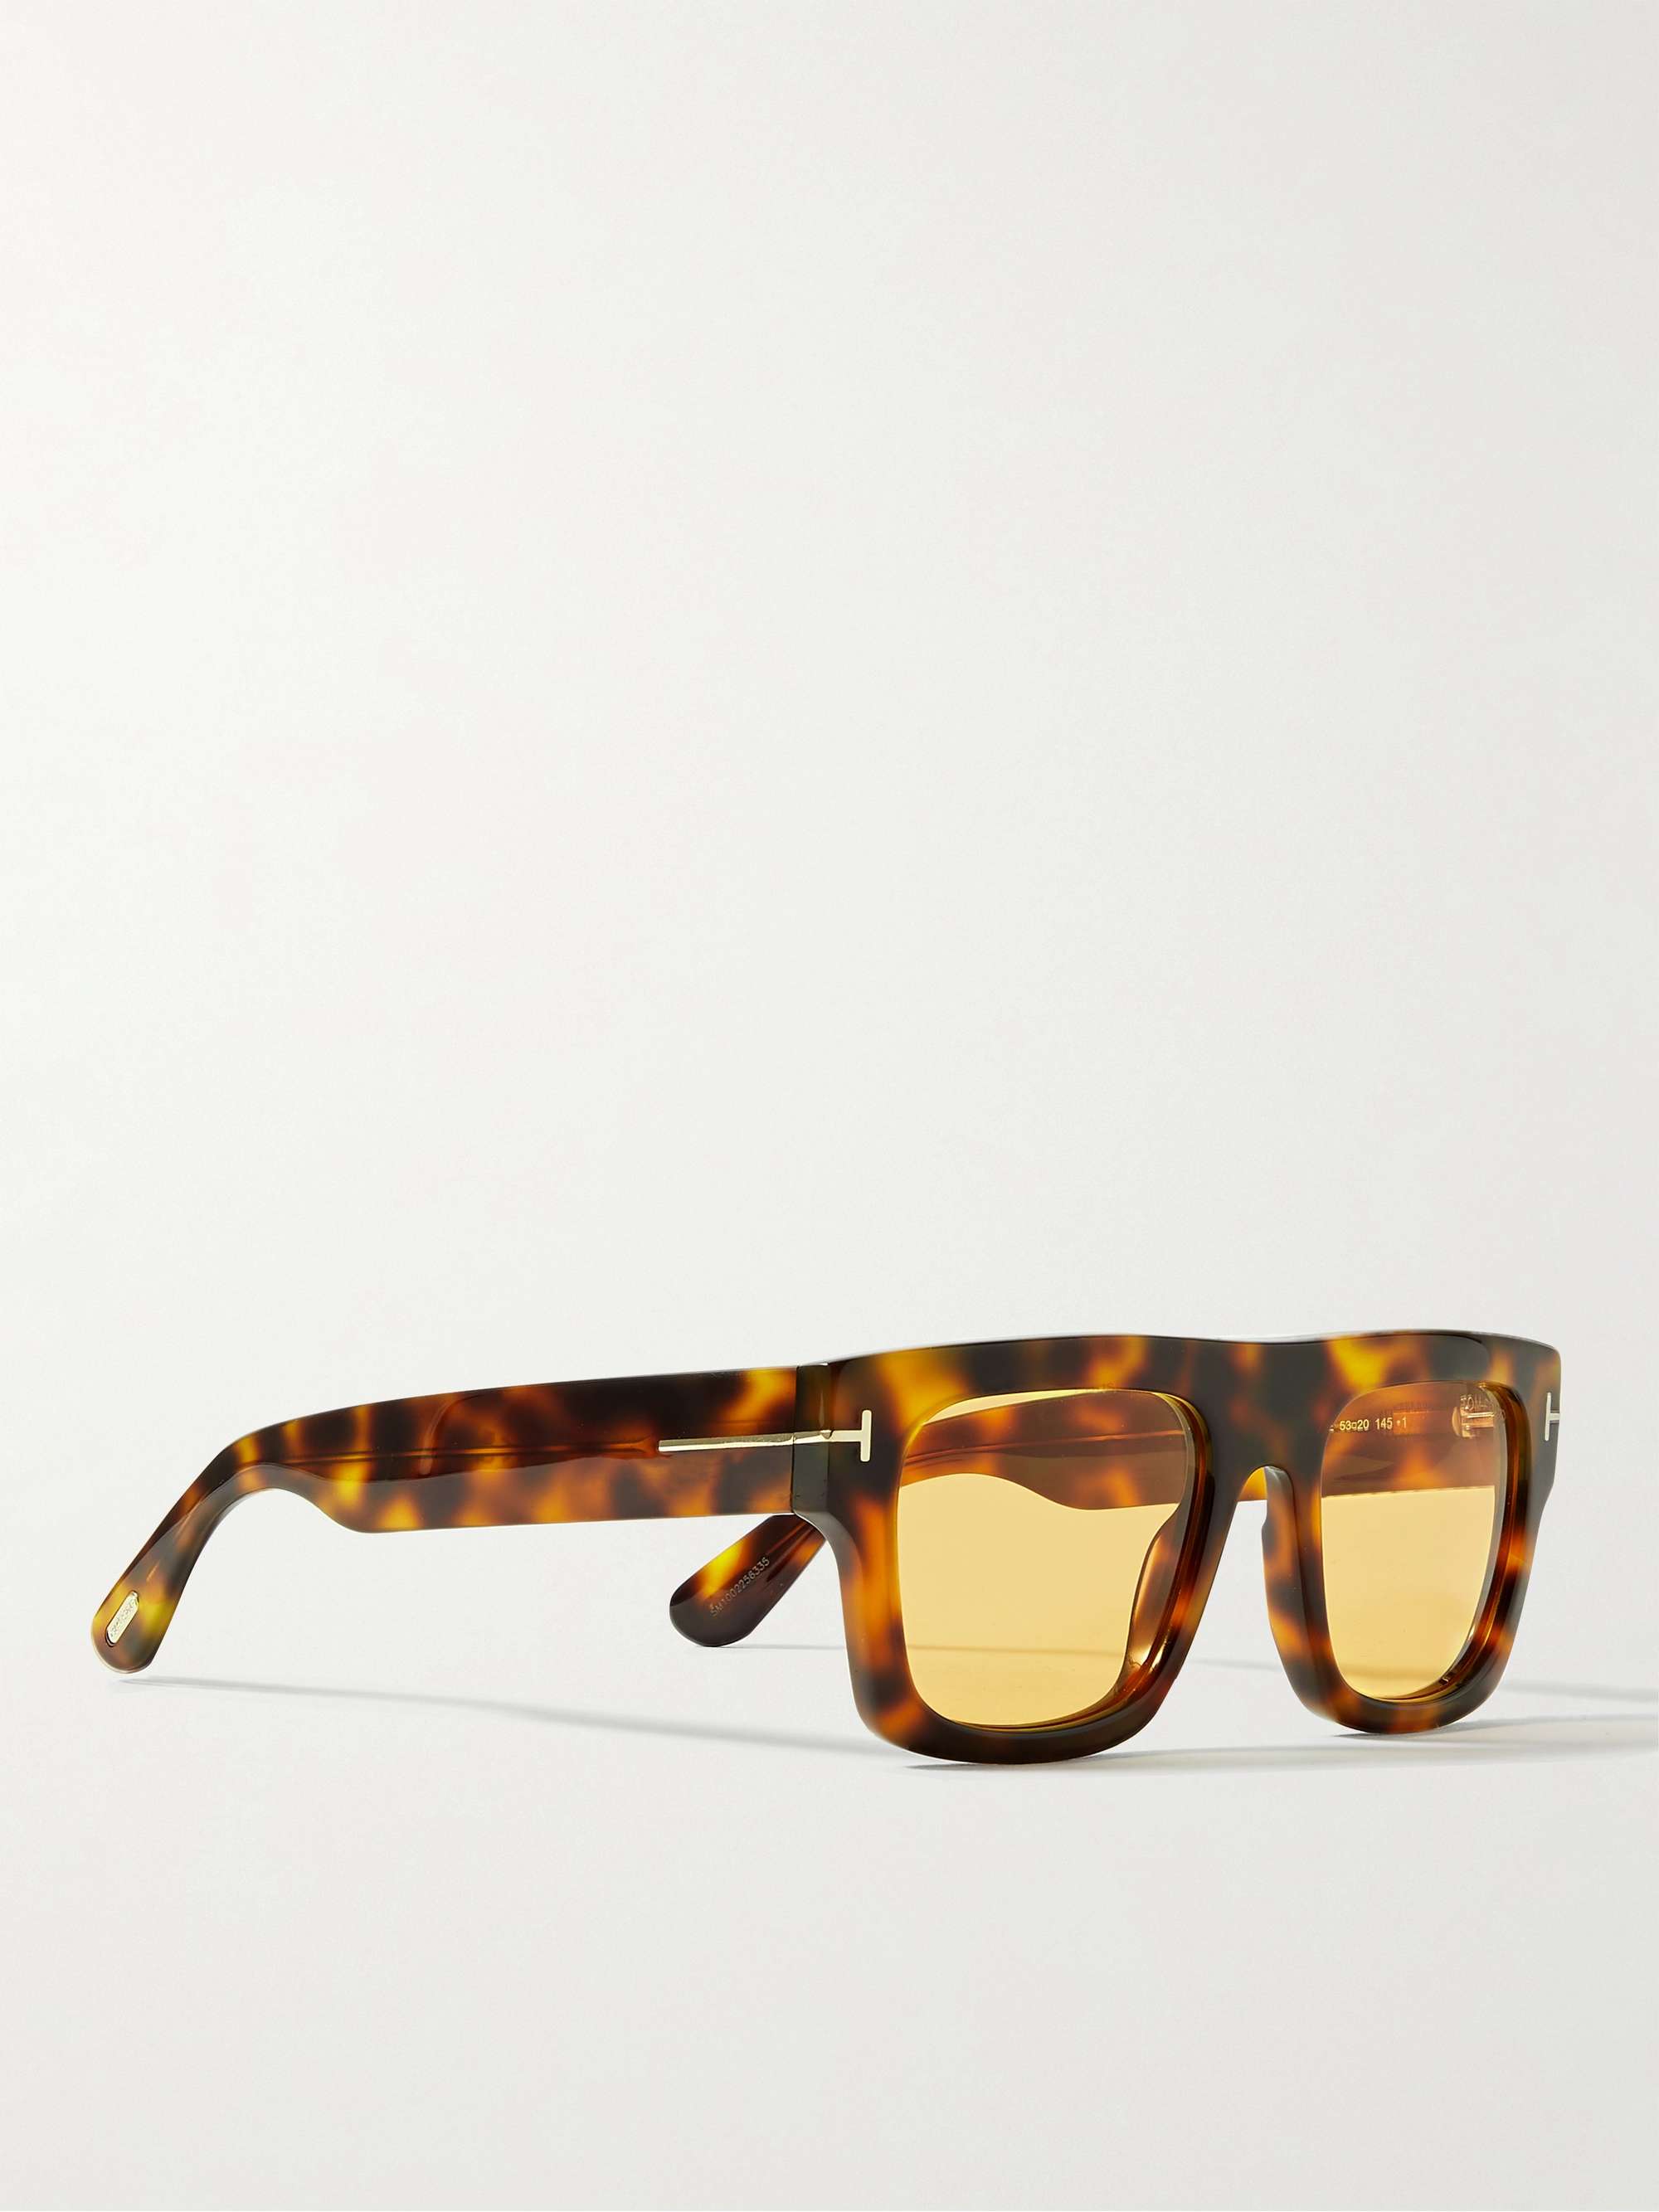 TOM FORD Square-Frame Tortoiseshell Acetate Sunglasses